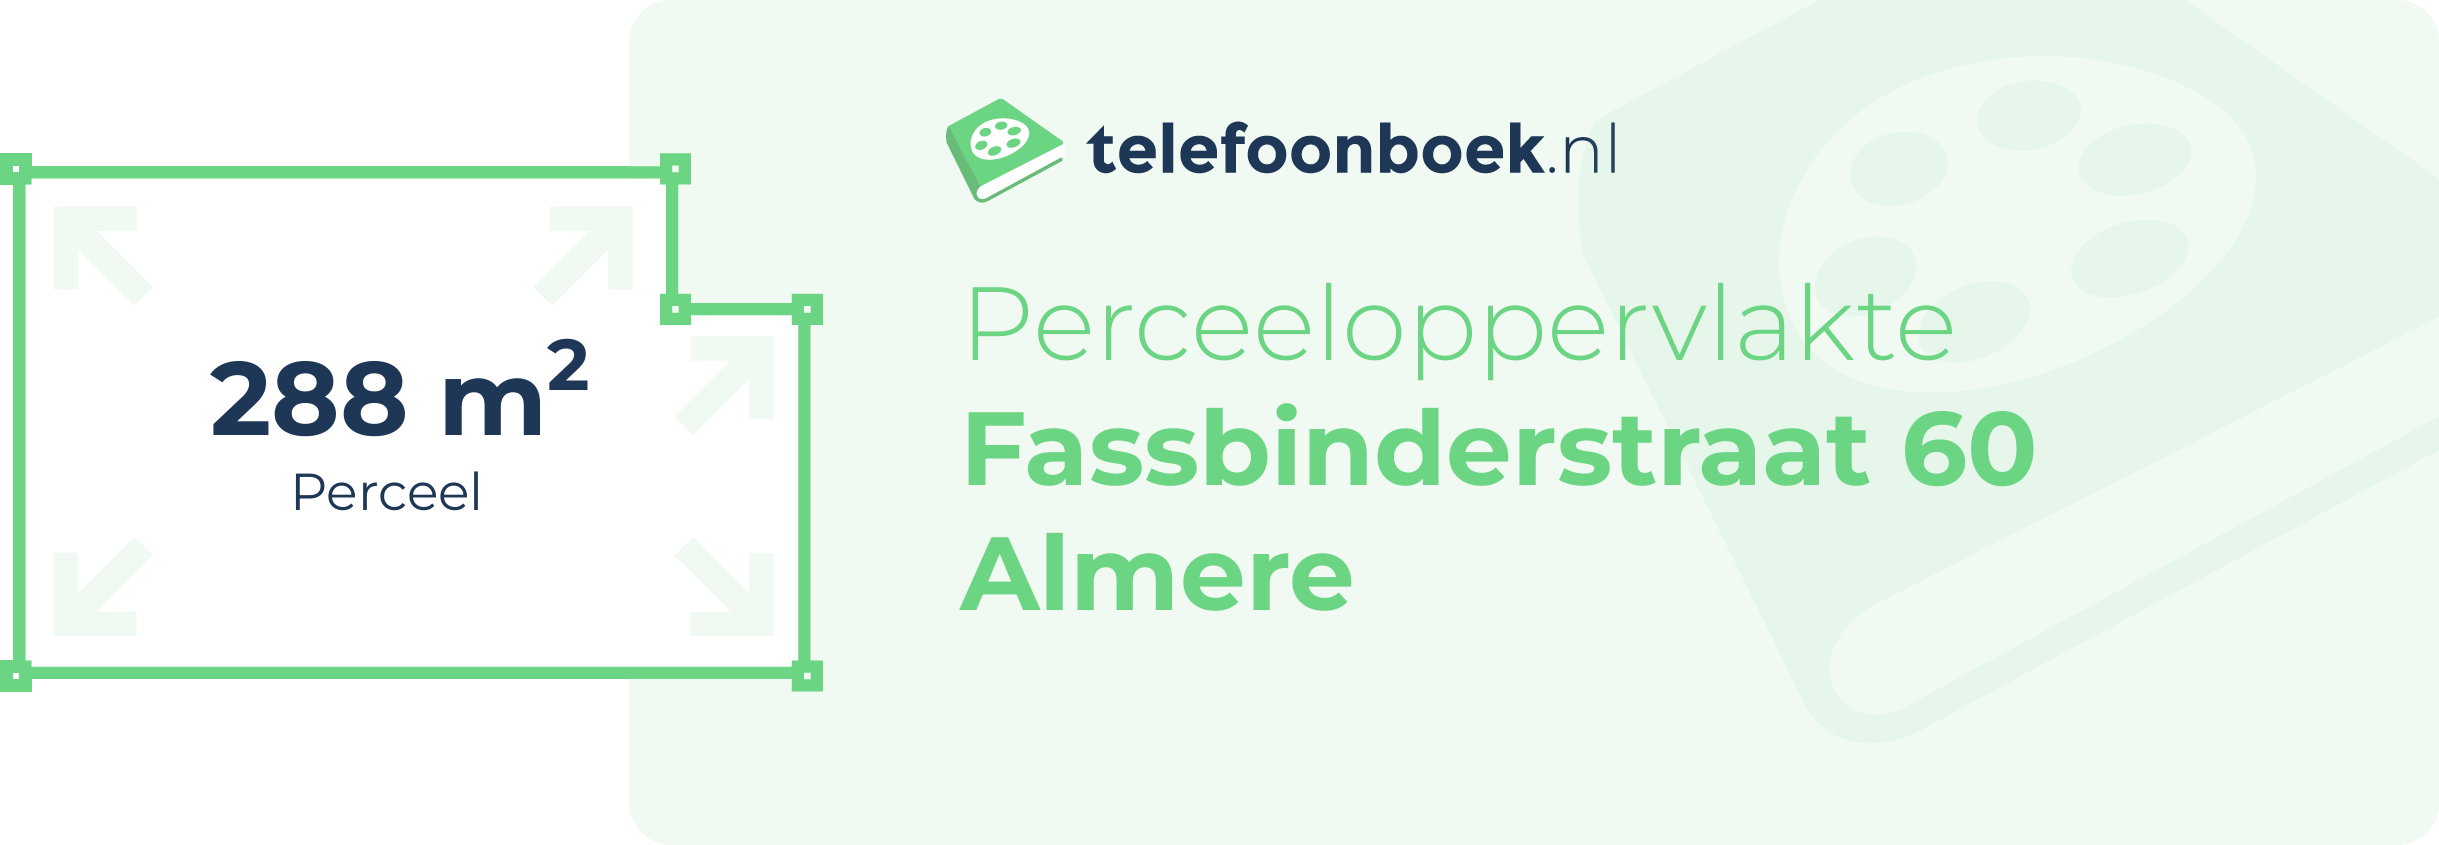 Perceeloppervlakte Fassbinderstraat 60 Almere